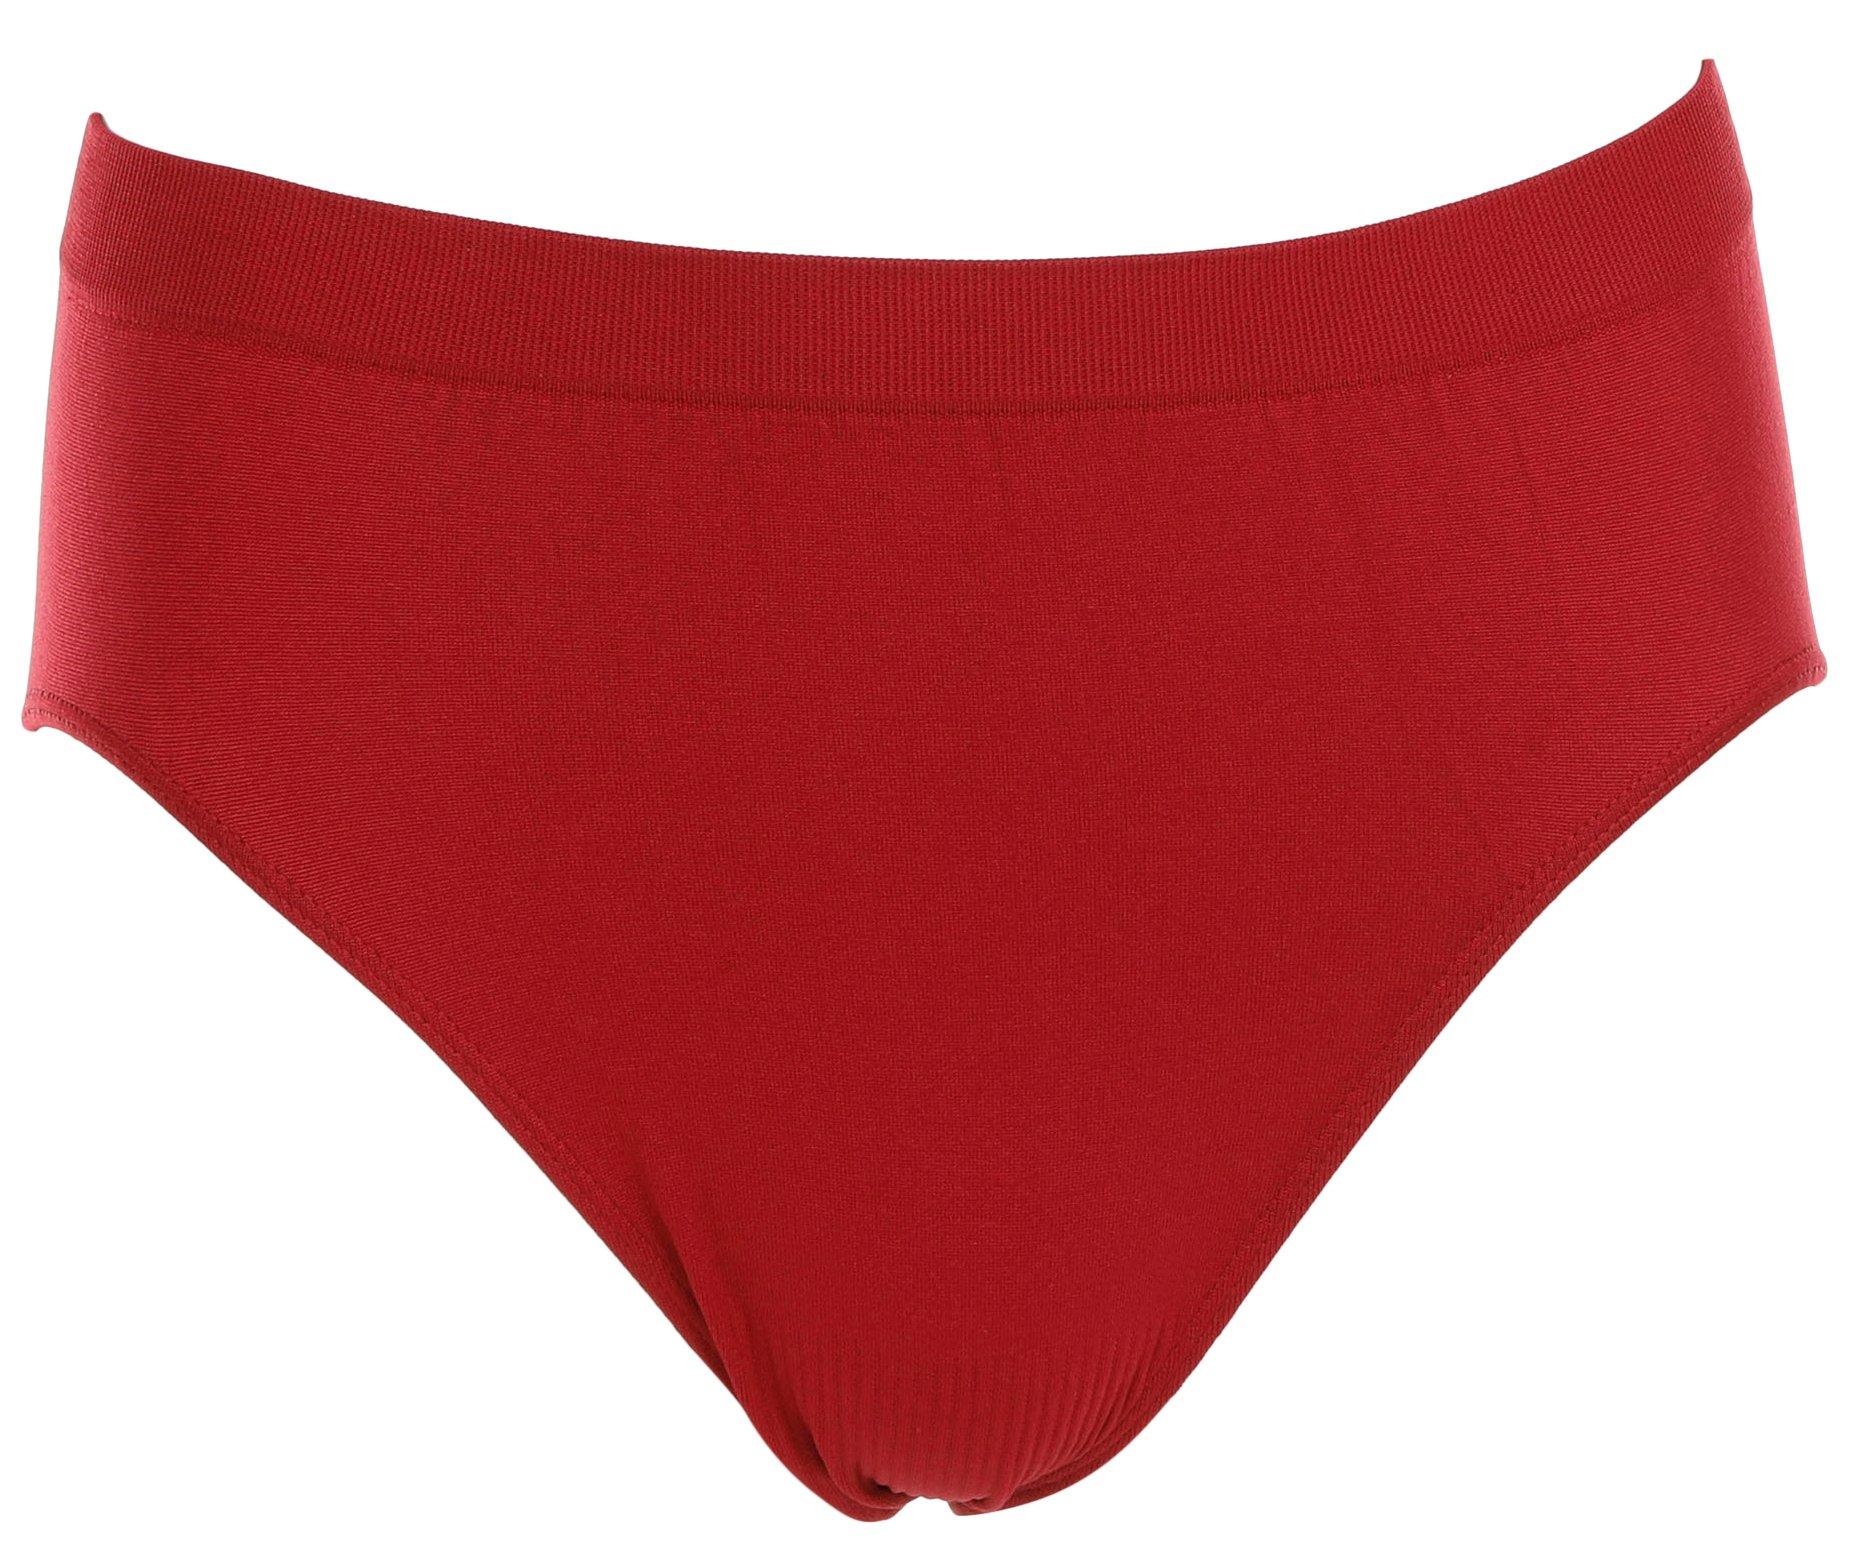 French Cut Seamless Underwear